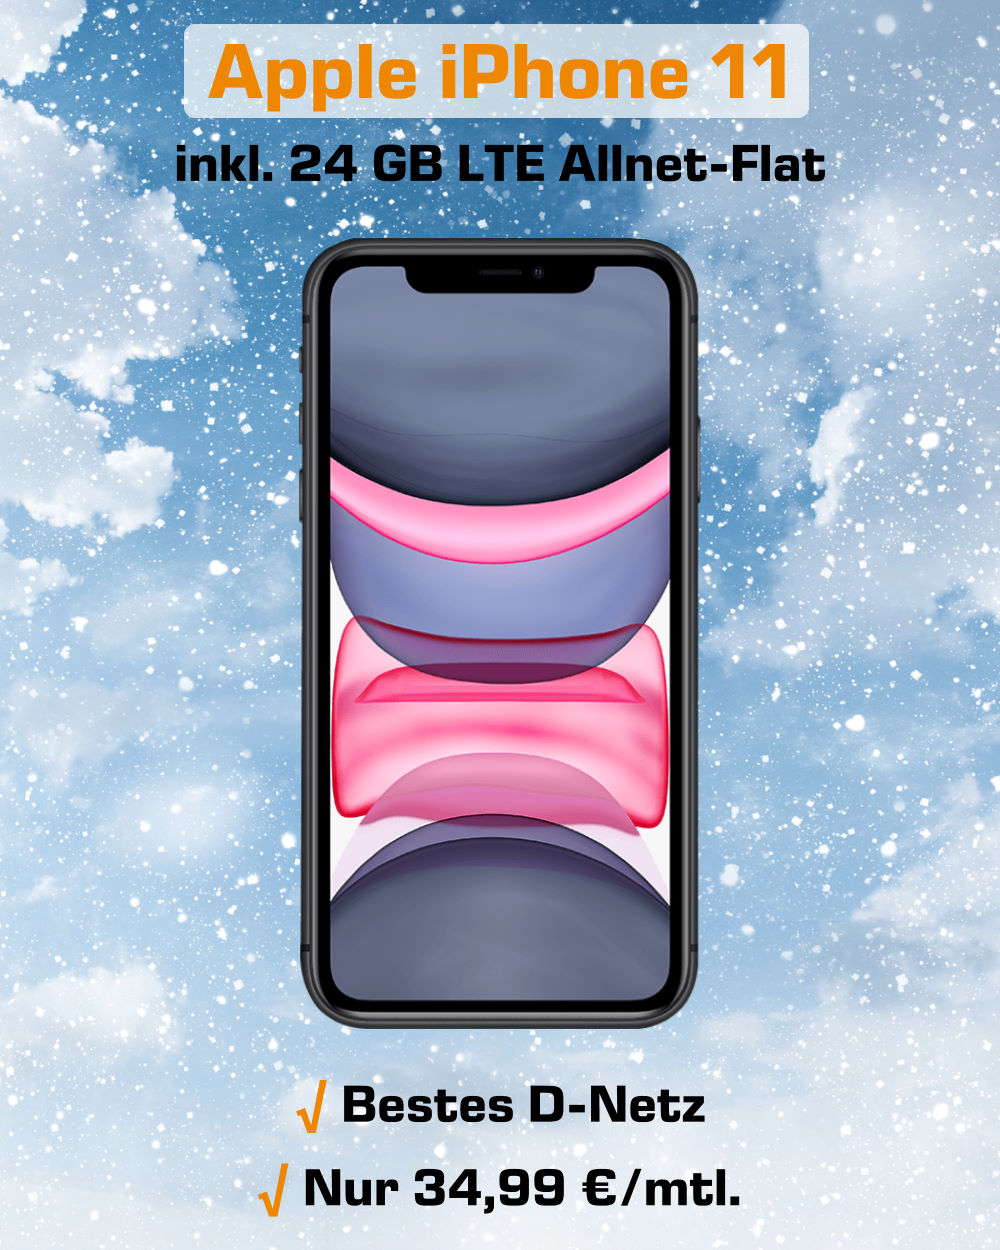 iPhone 11 Handyvertrag inkl. 24 GB LTE Allnet-Flat